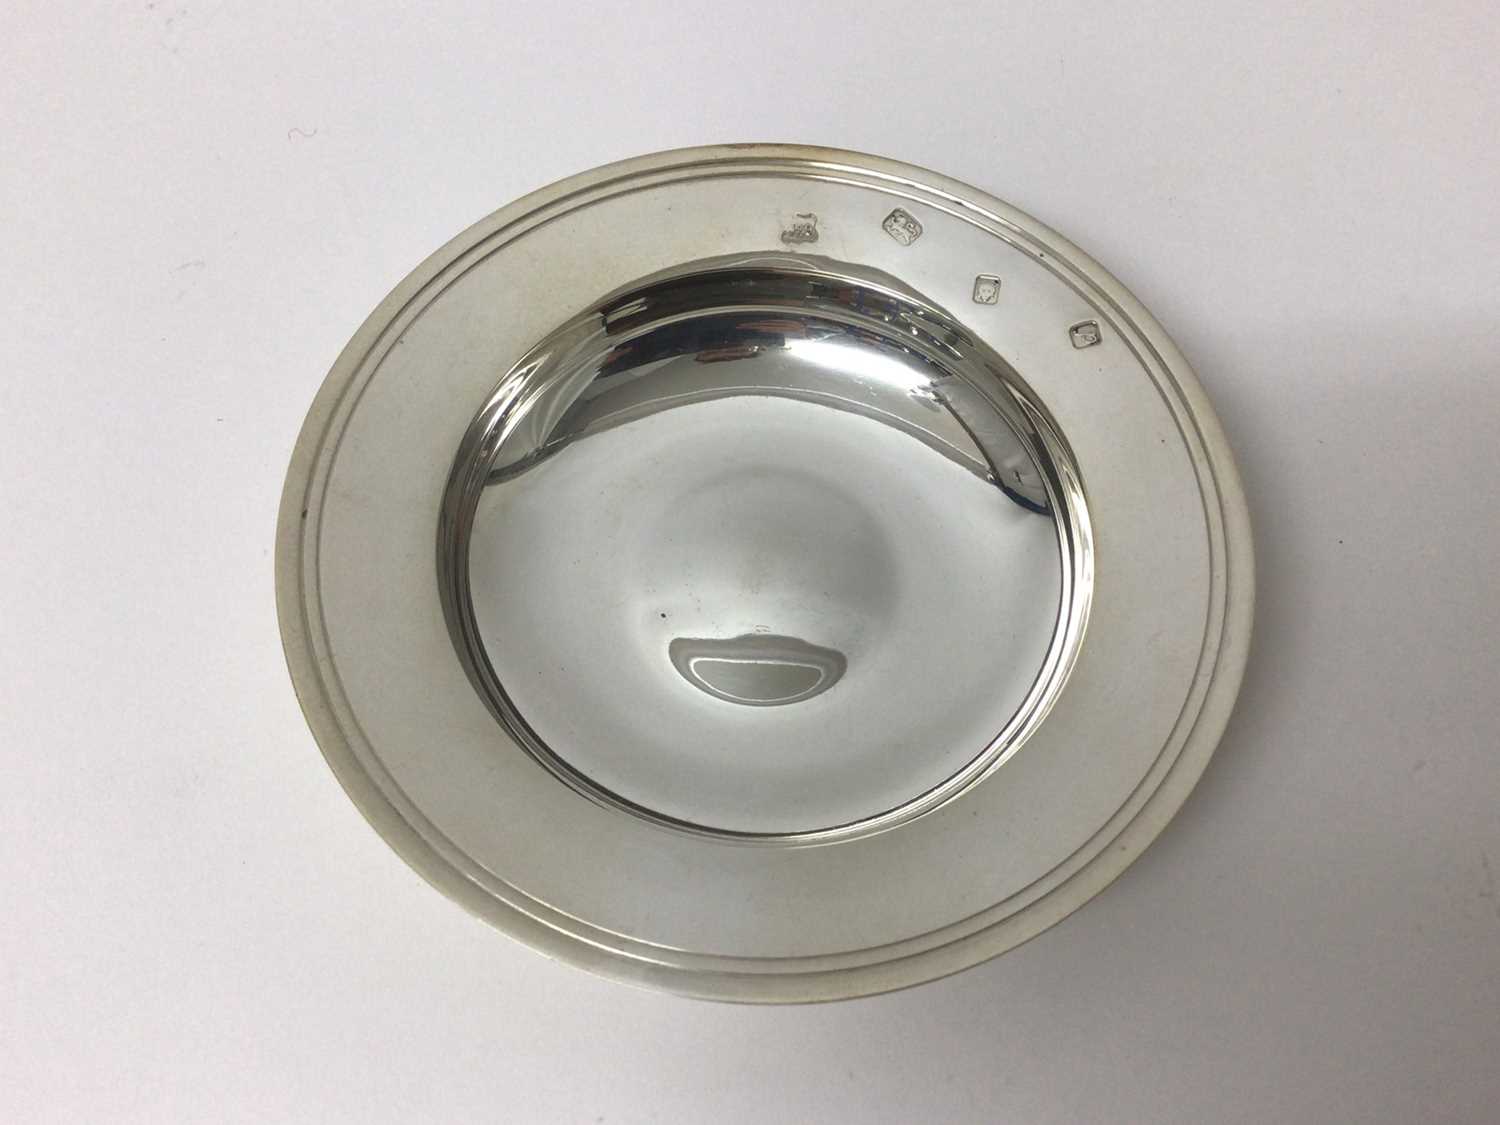 Lot 104 - Contemporary silver Armada dish, 15cm diameter (London 1970)